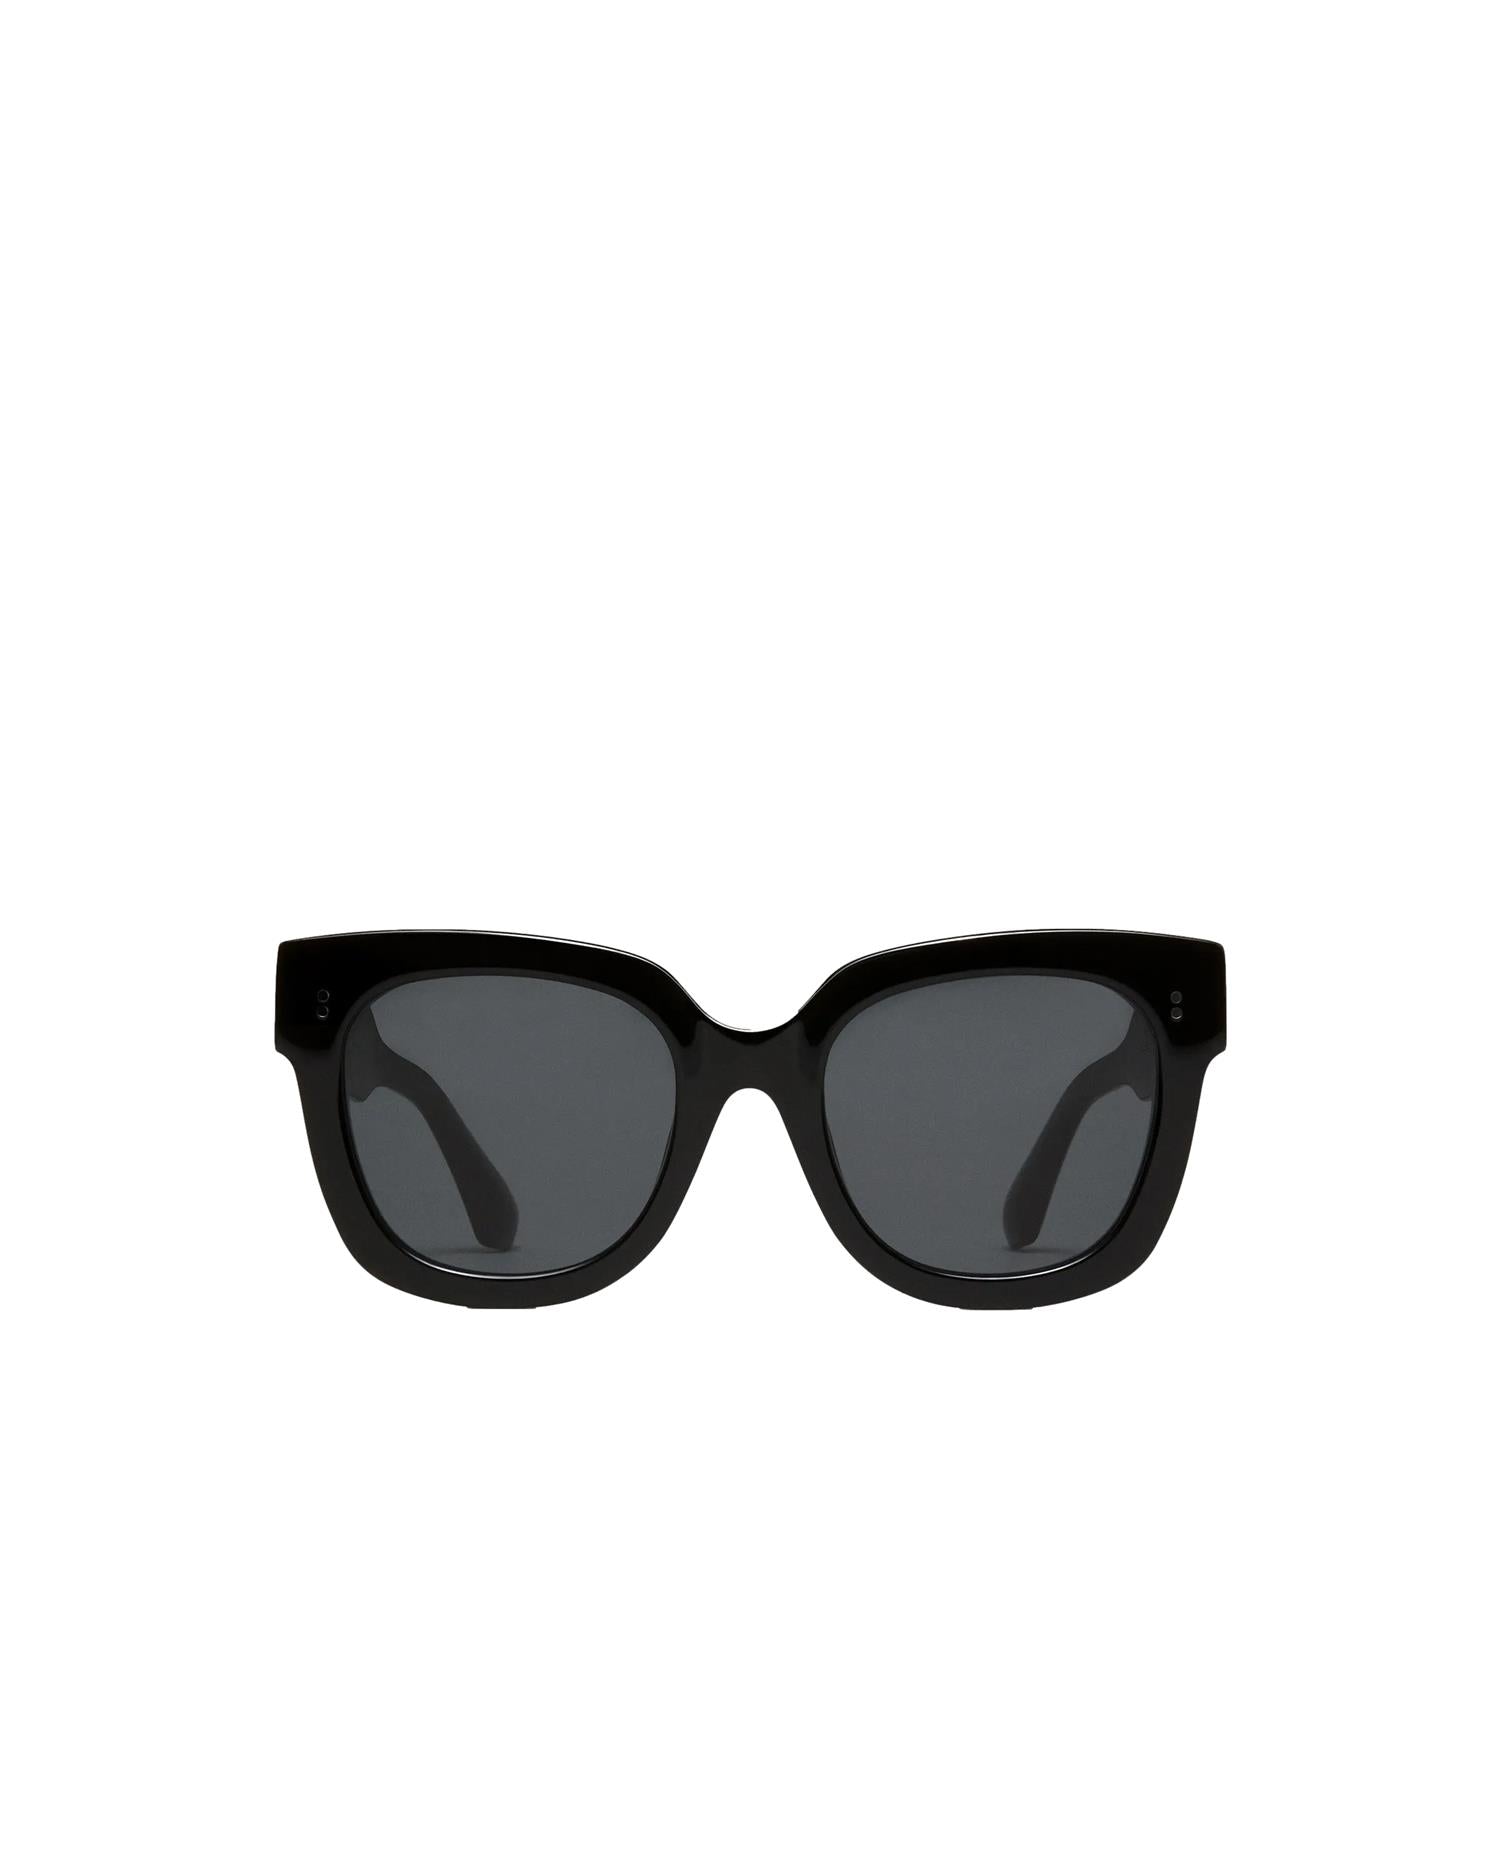 Chimi Eyewear 08 Black Solbriller Sort - modostore.no